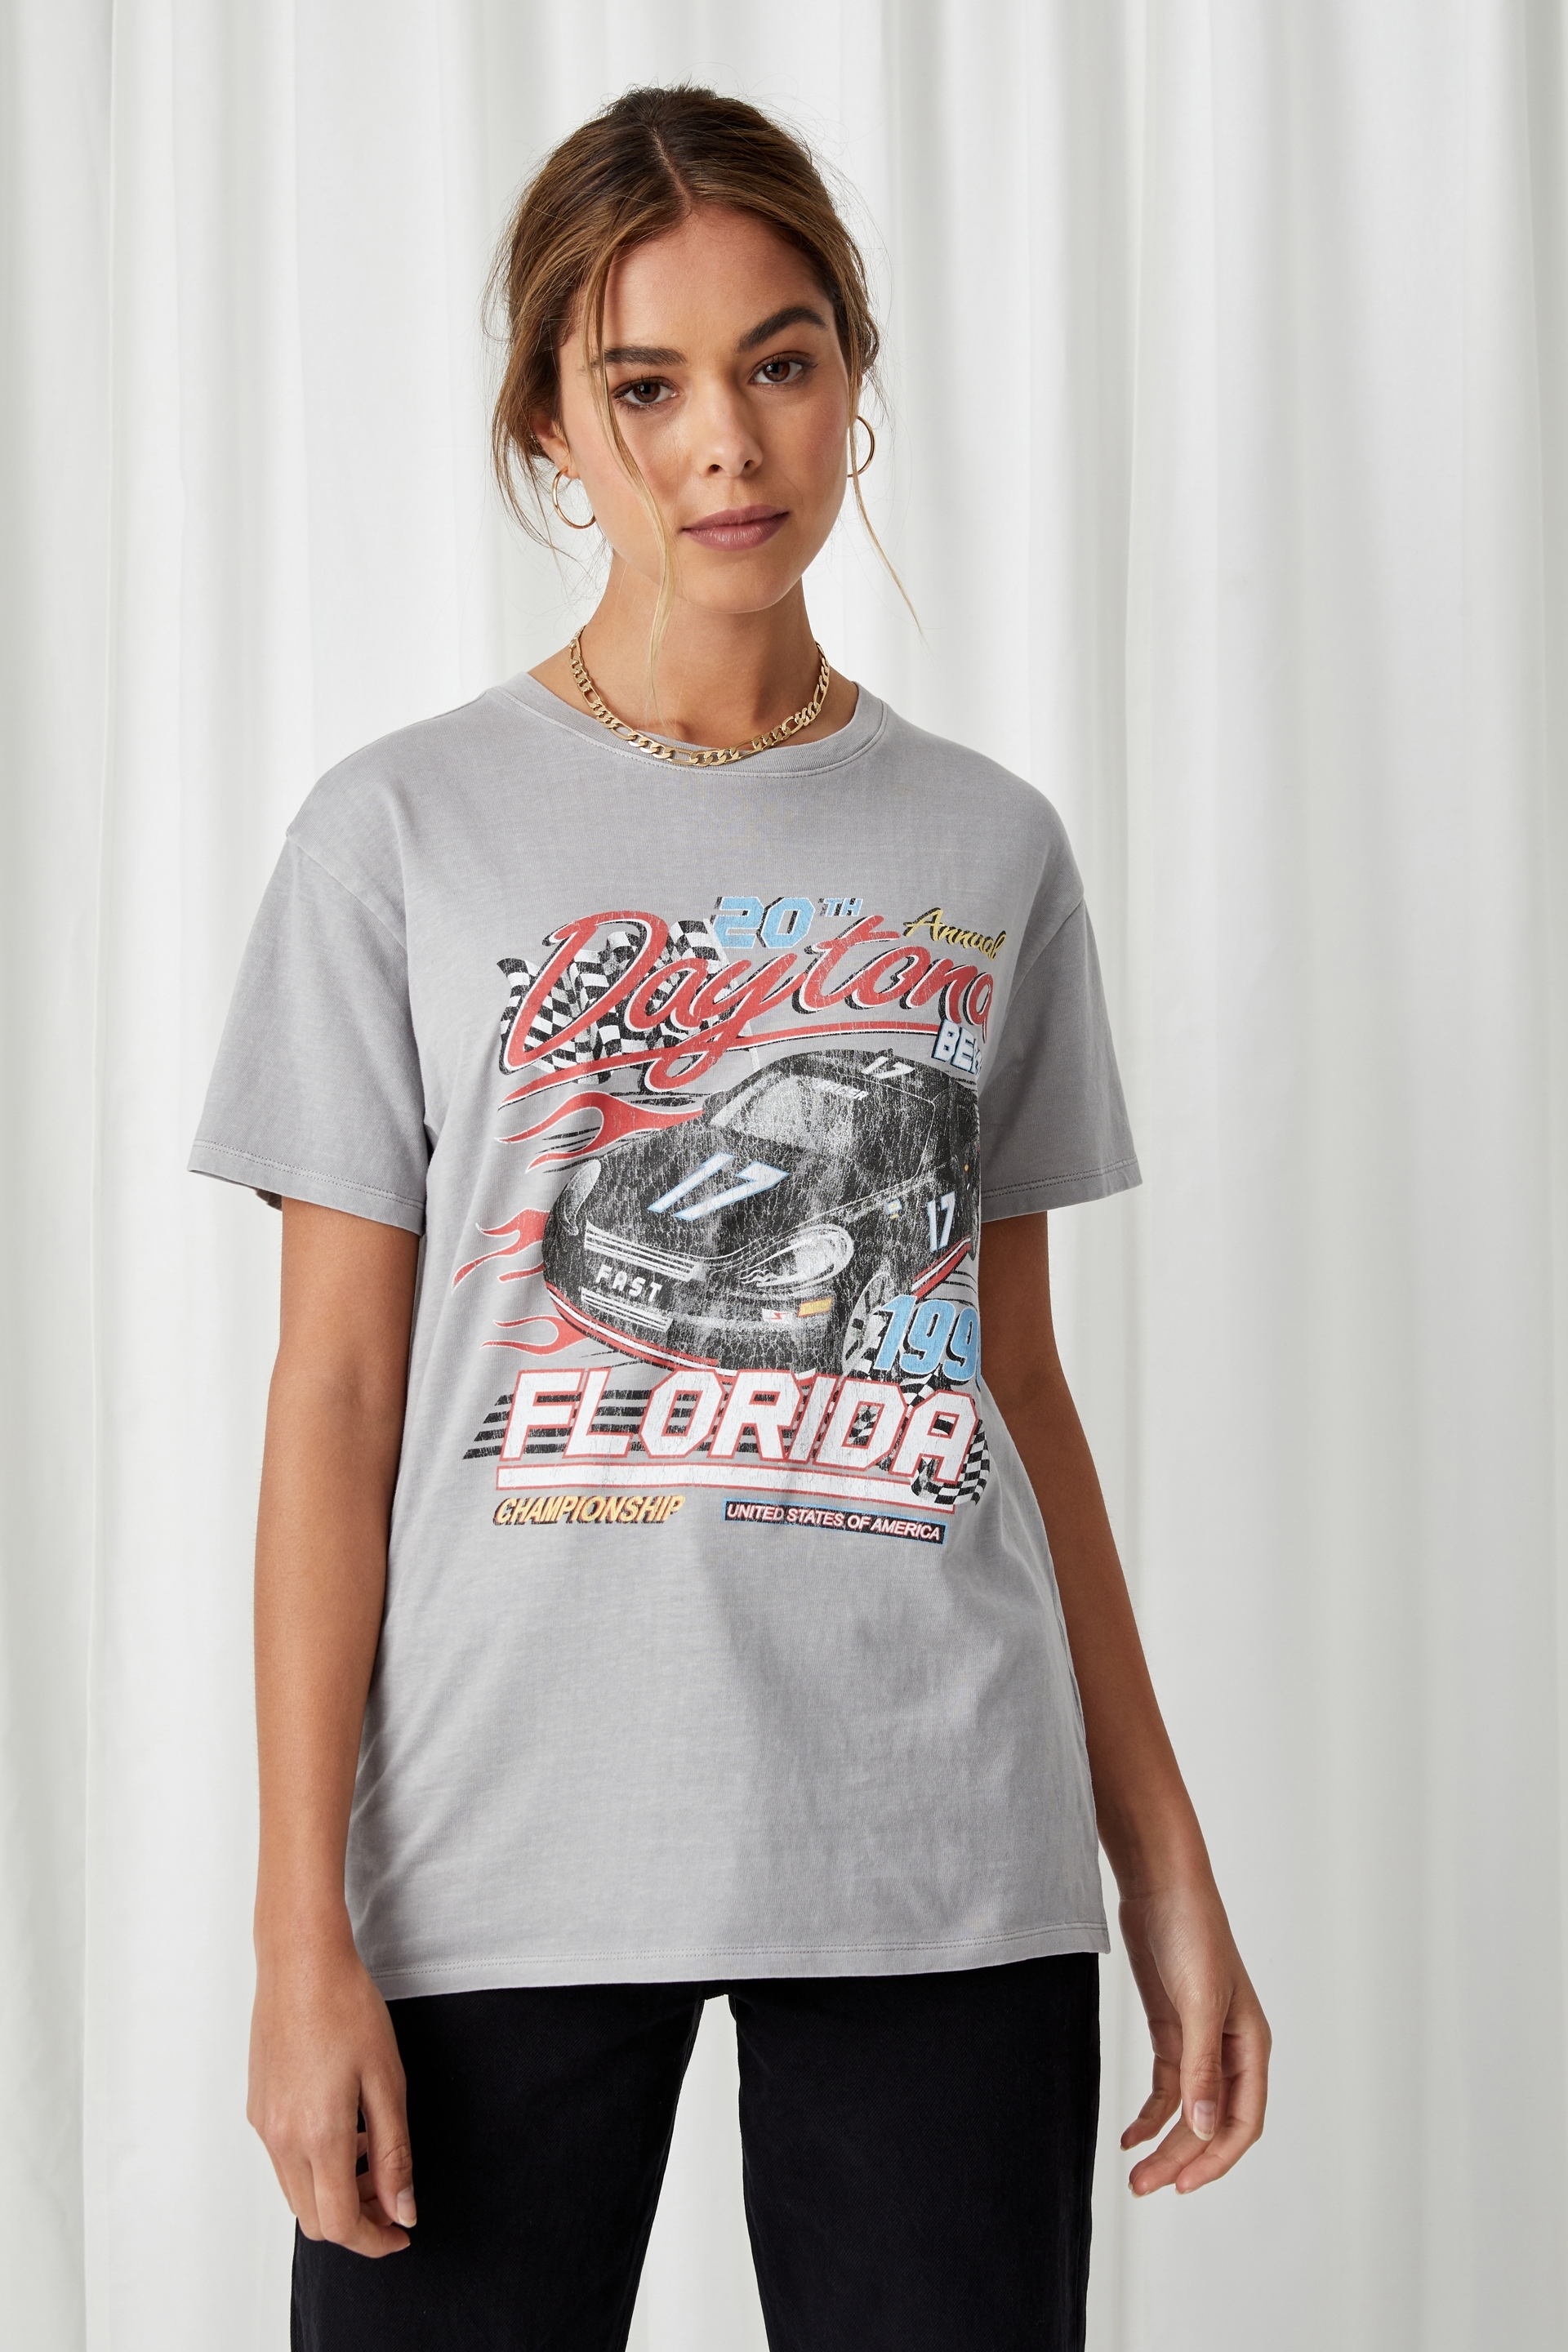 Supré - Daytona Racer Longline T Shirt - Vintage wash pearl grey/daytona racer